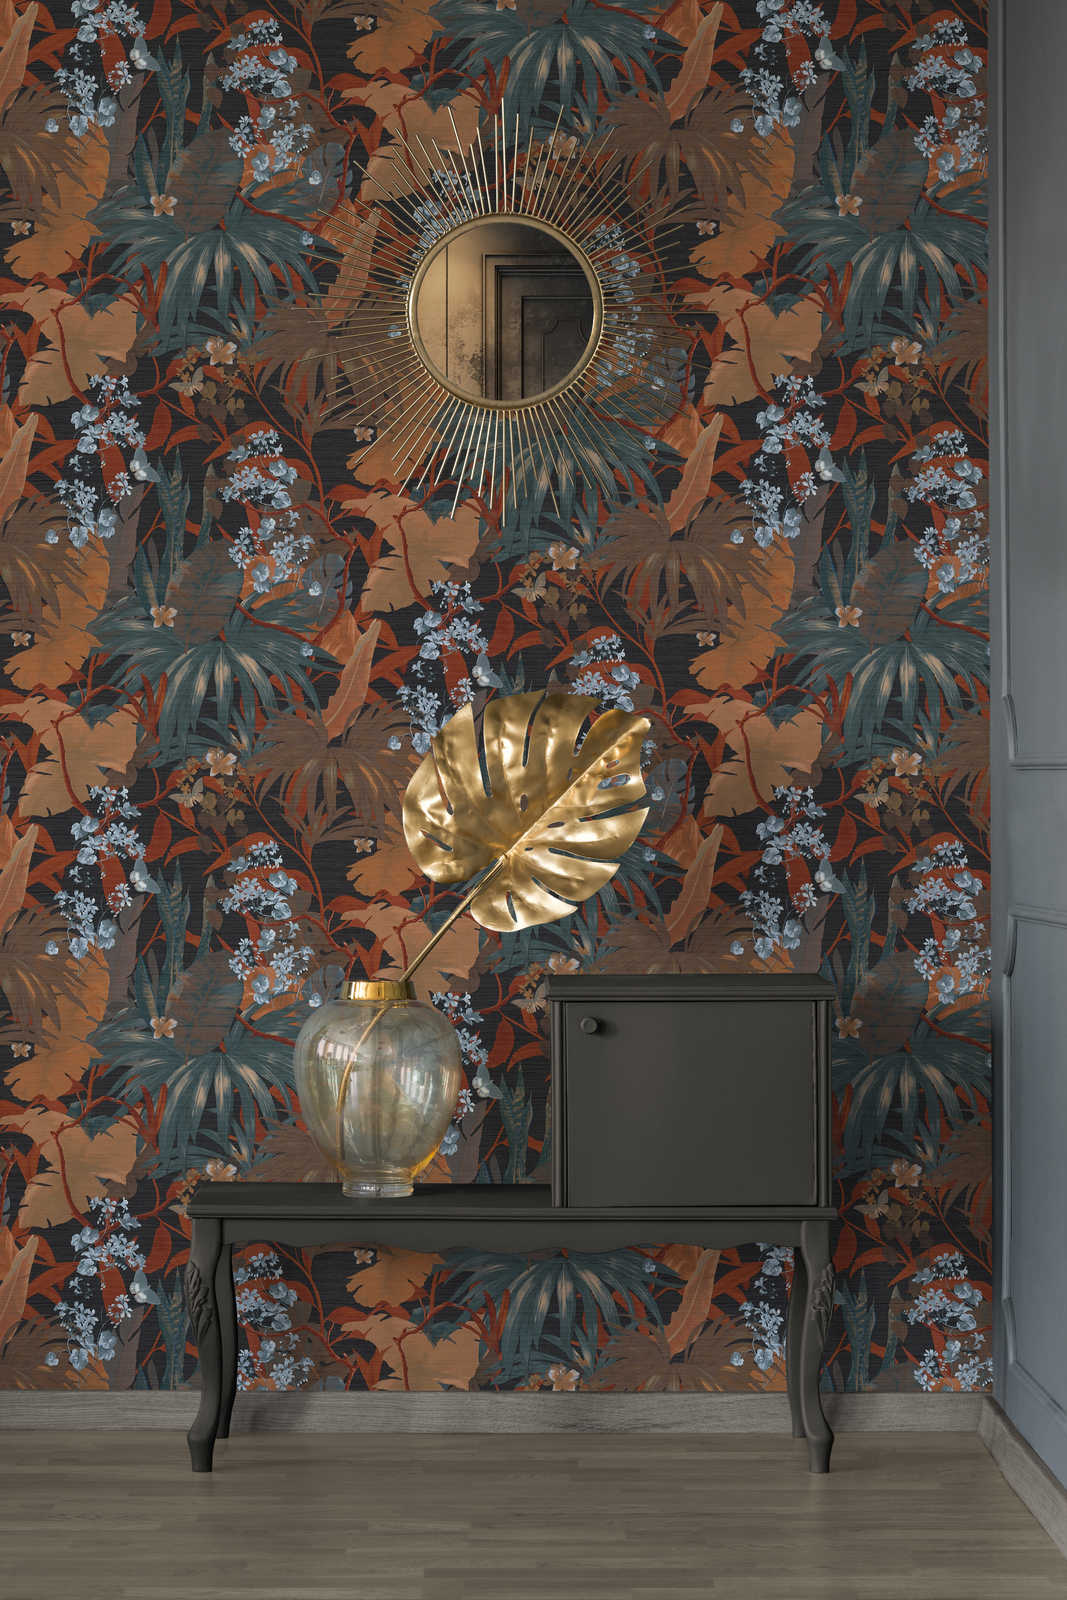             Jungle wallpaper with leaf pattern - orange, blue
        